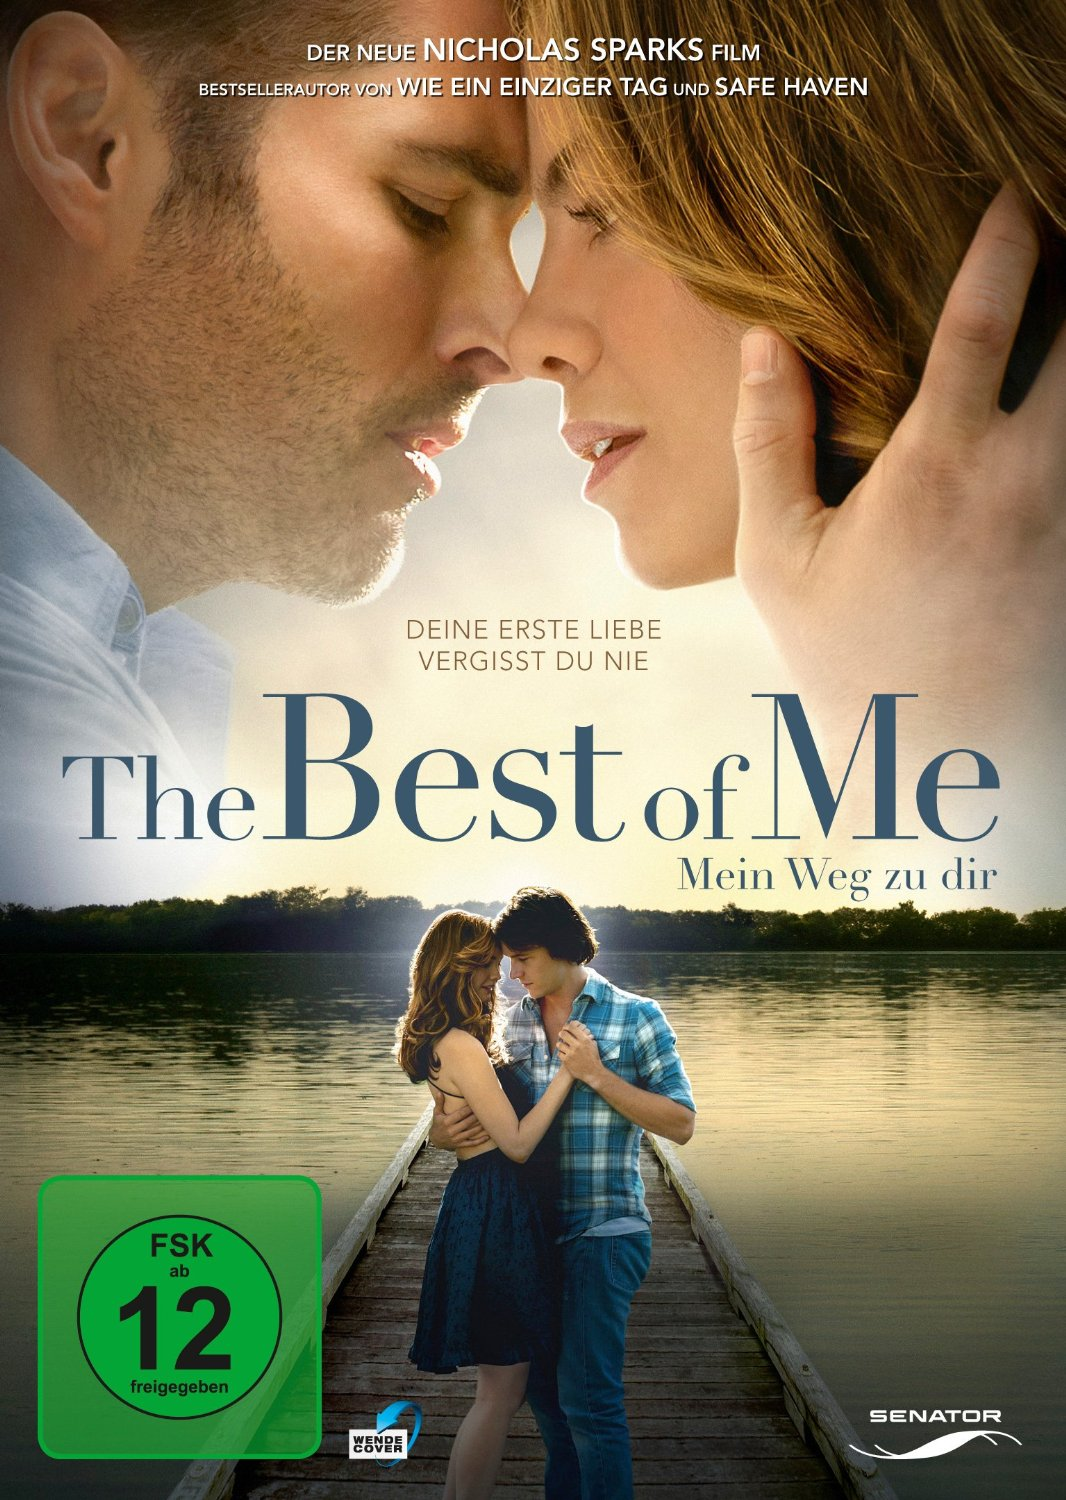 The Best of me - dir Weg Mein zu DVD